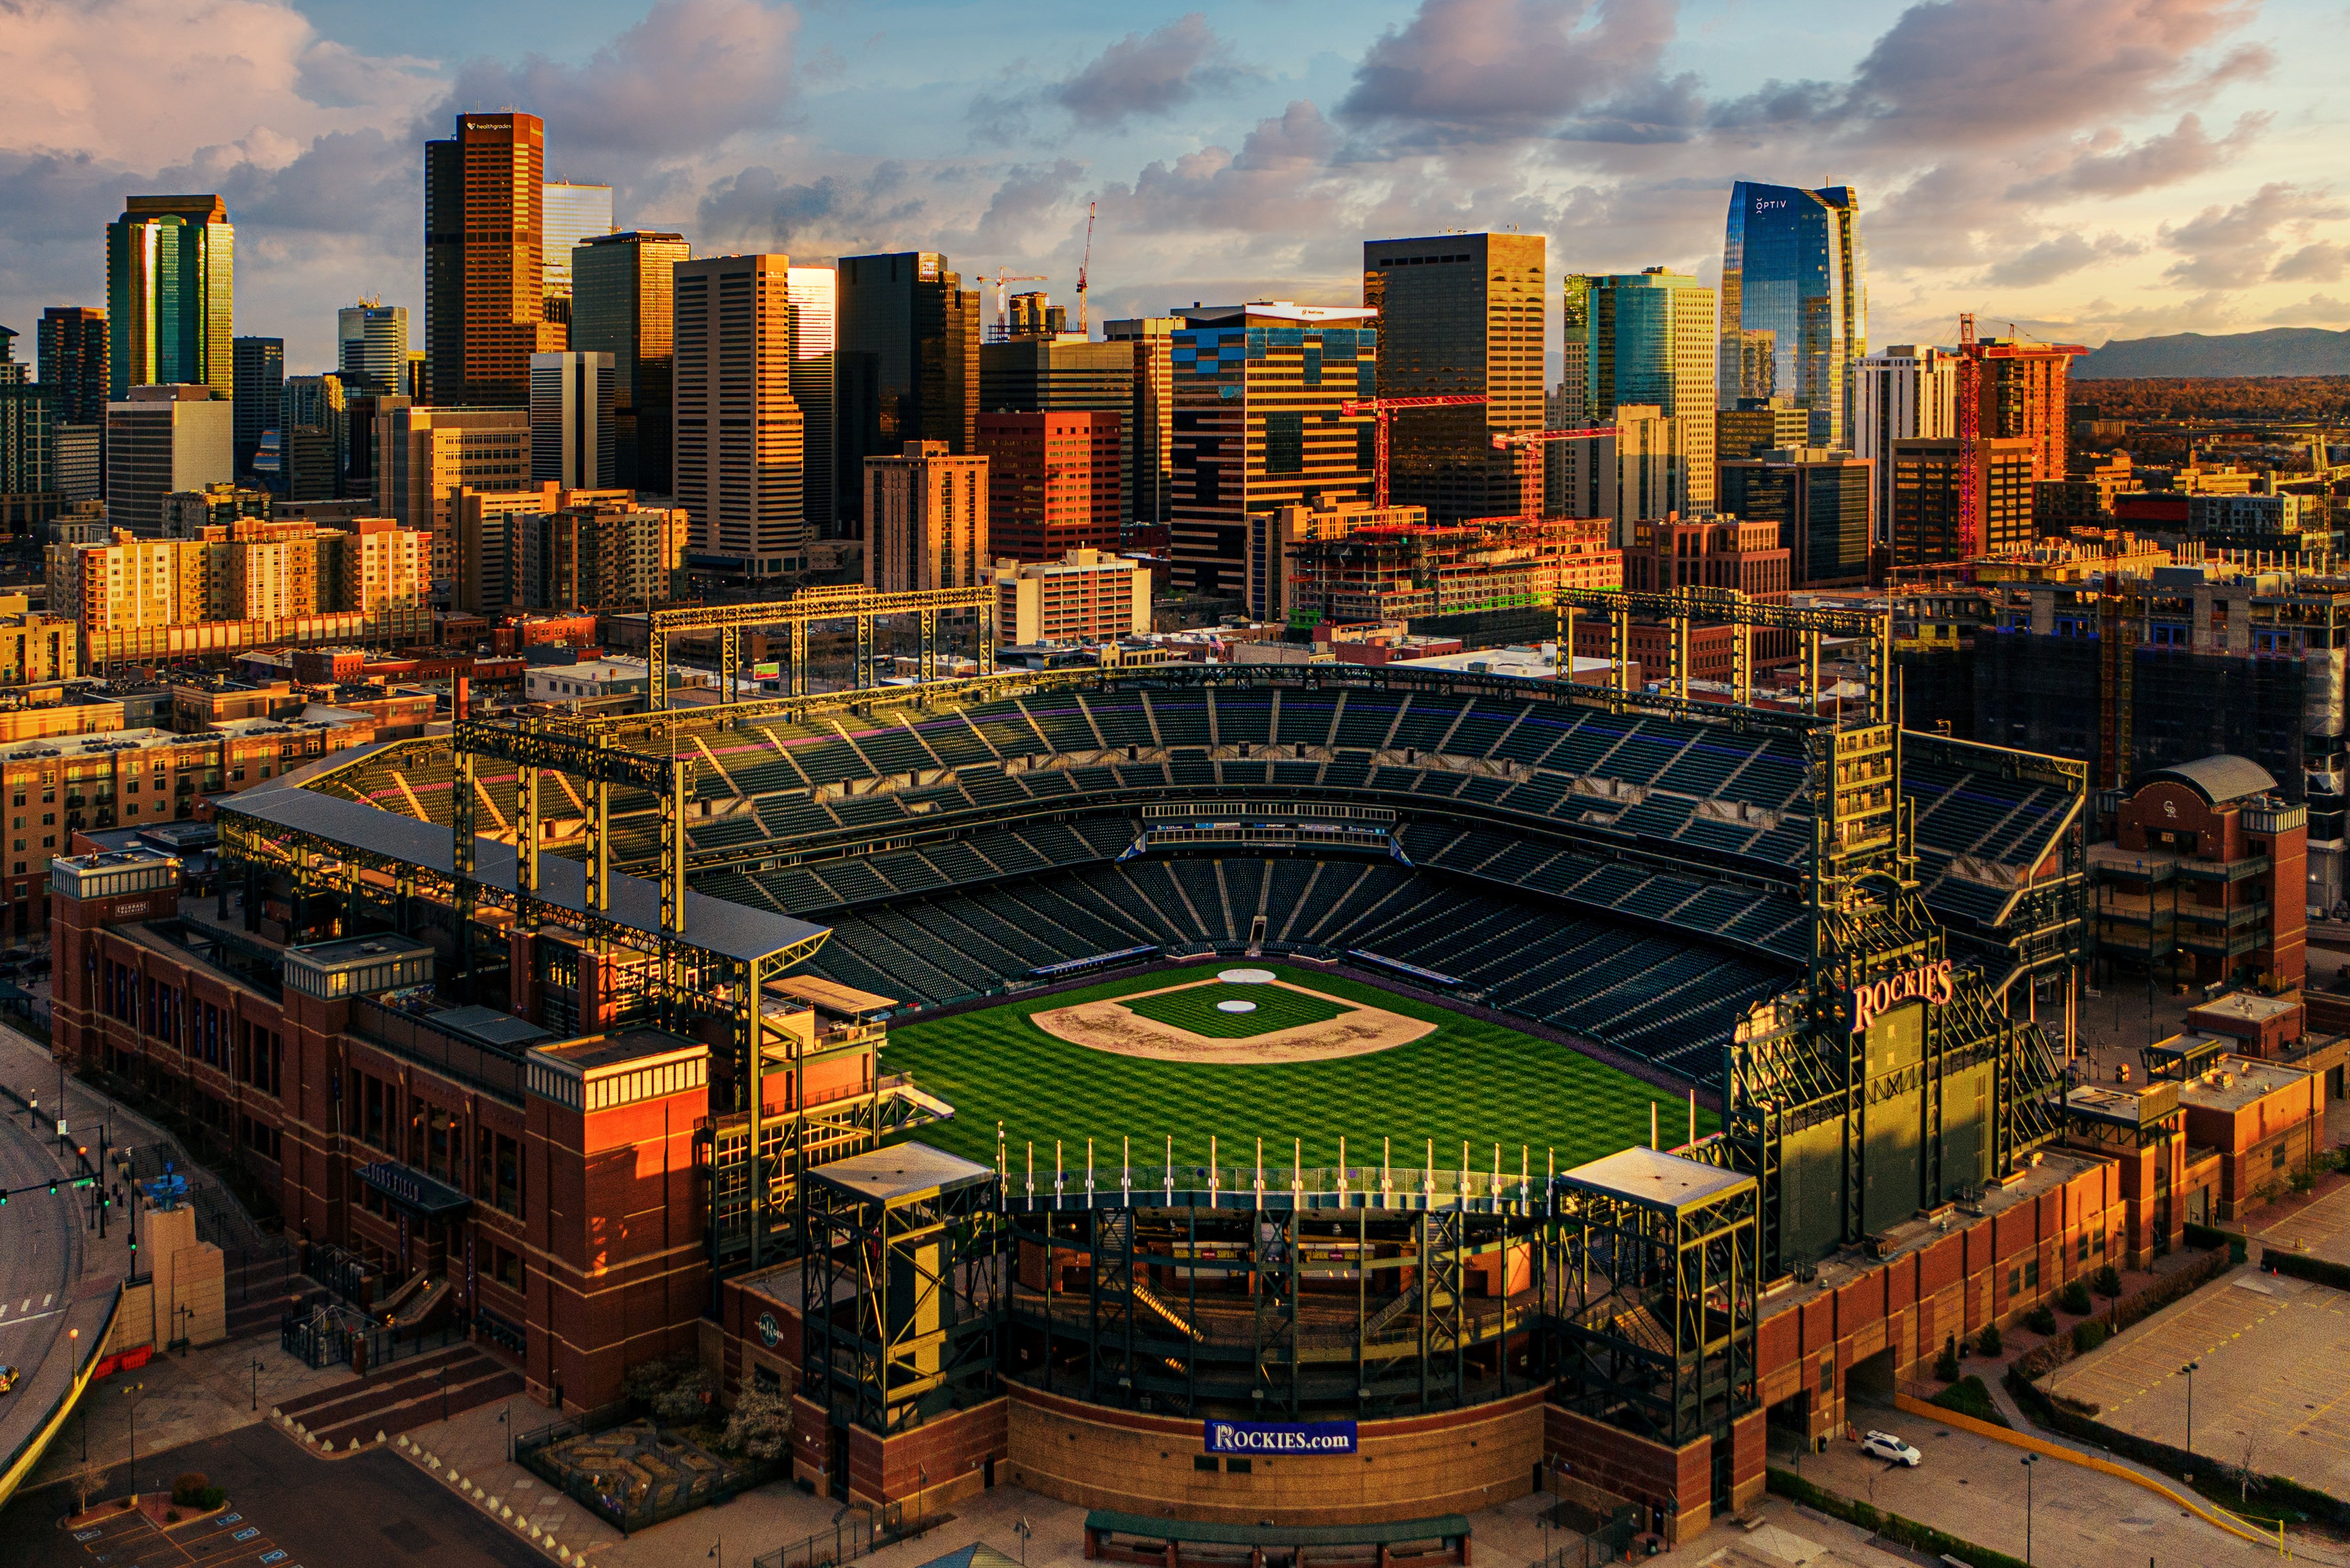 Arial view of the Colorado Rockies baseball stadium.